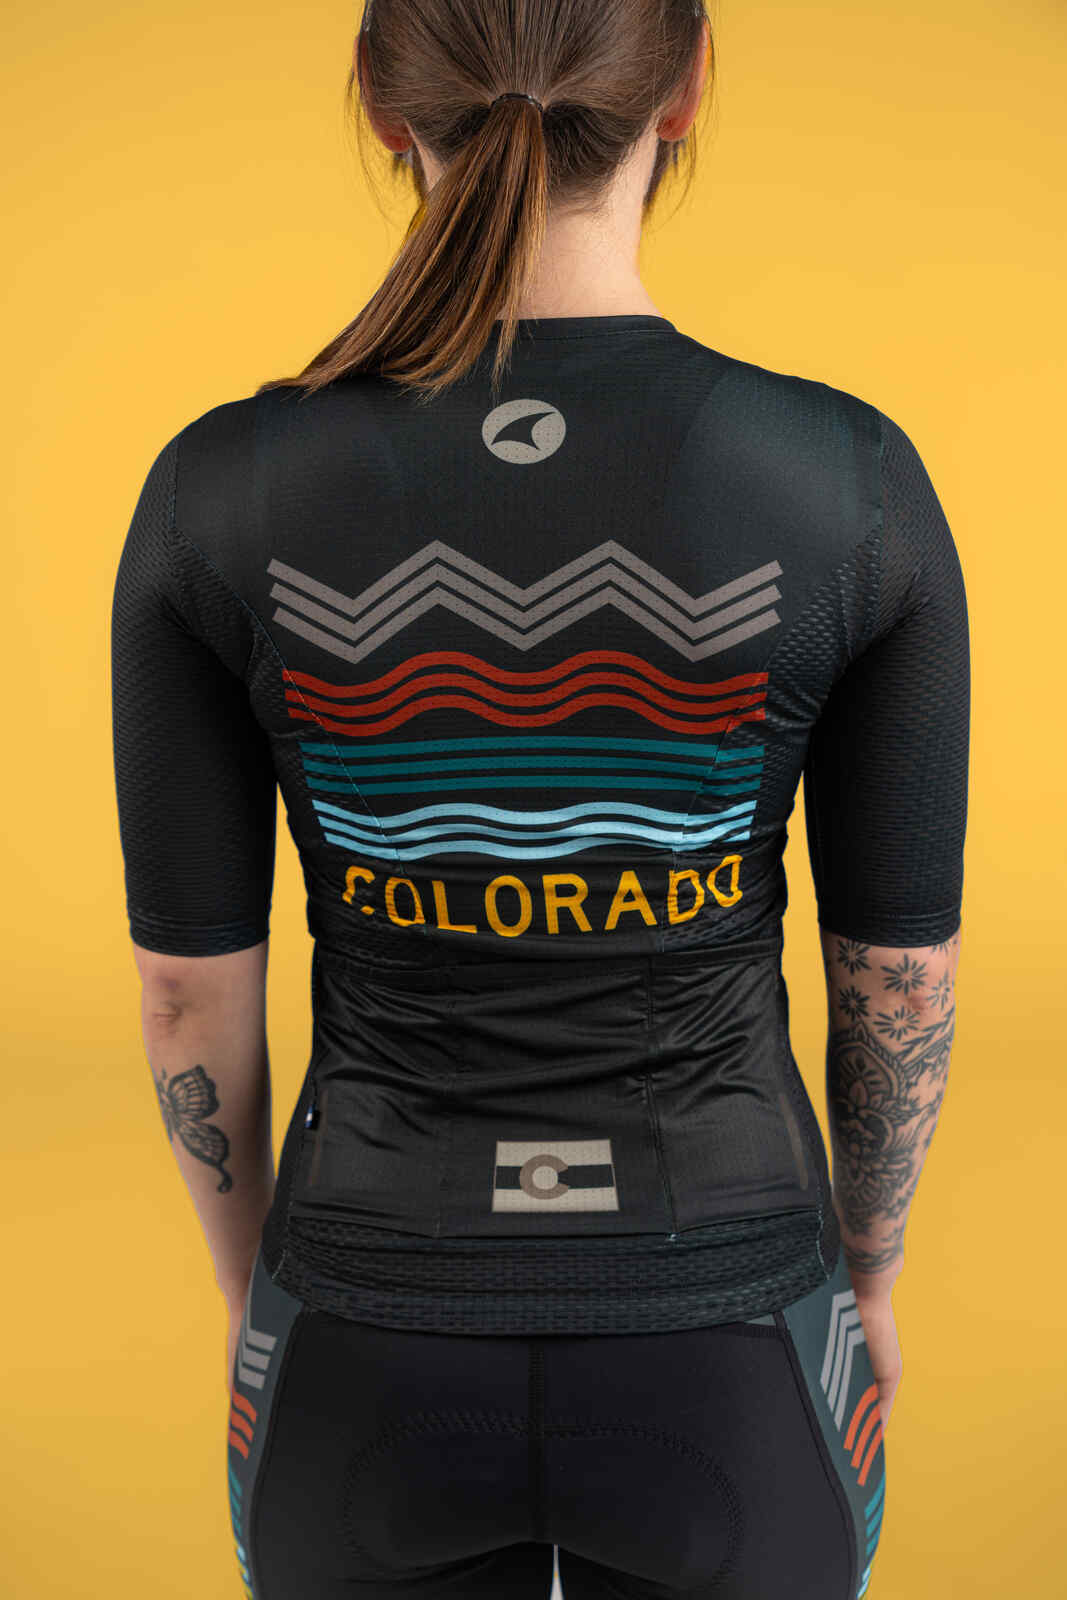 Women's Navy Blue Colorado Mesh Cycling Jersey - Back Pockets